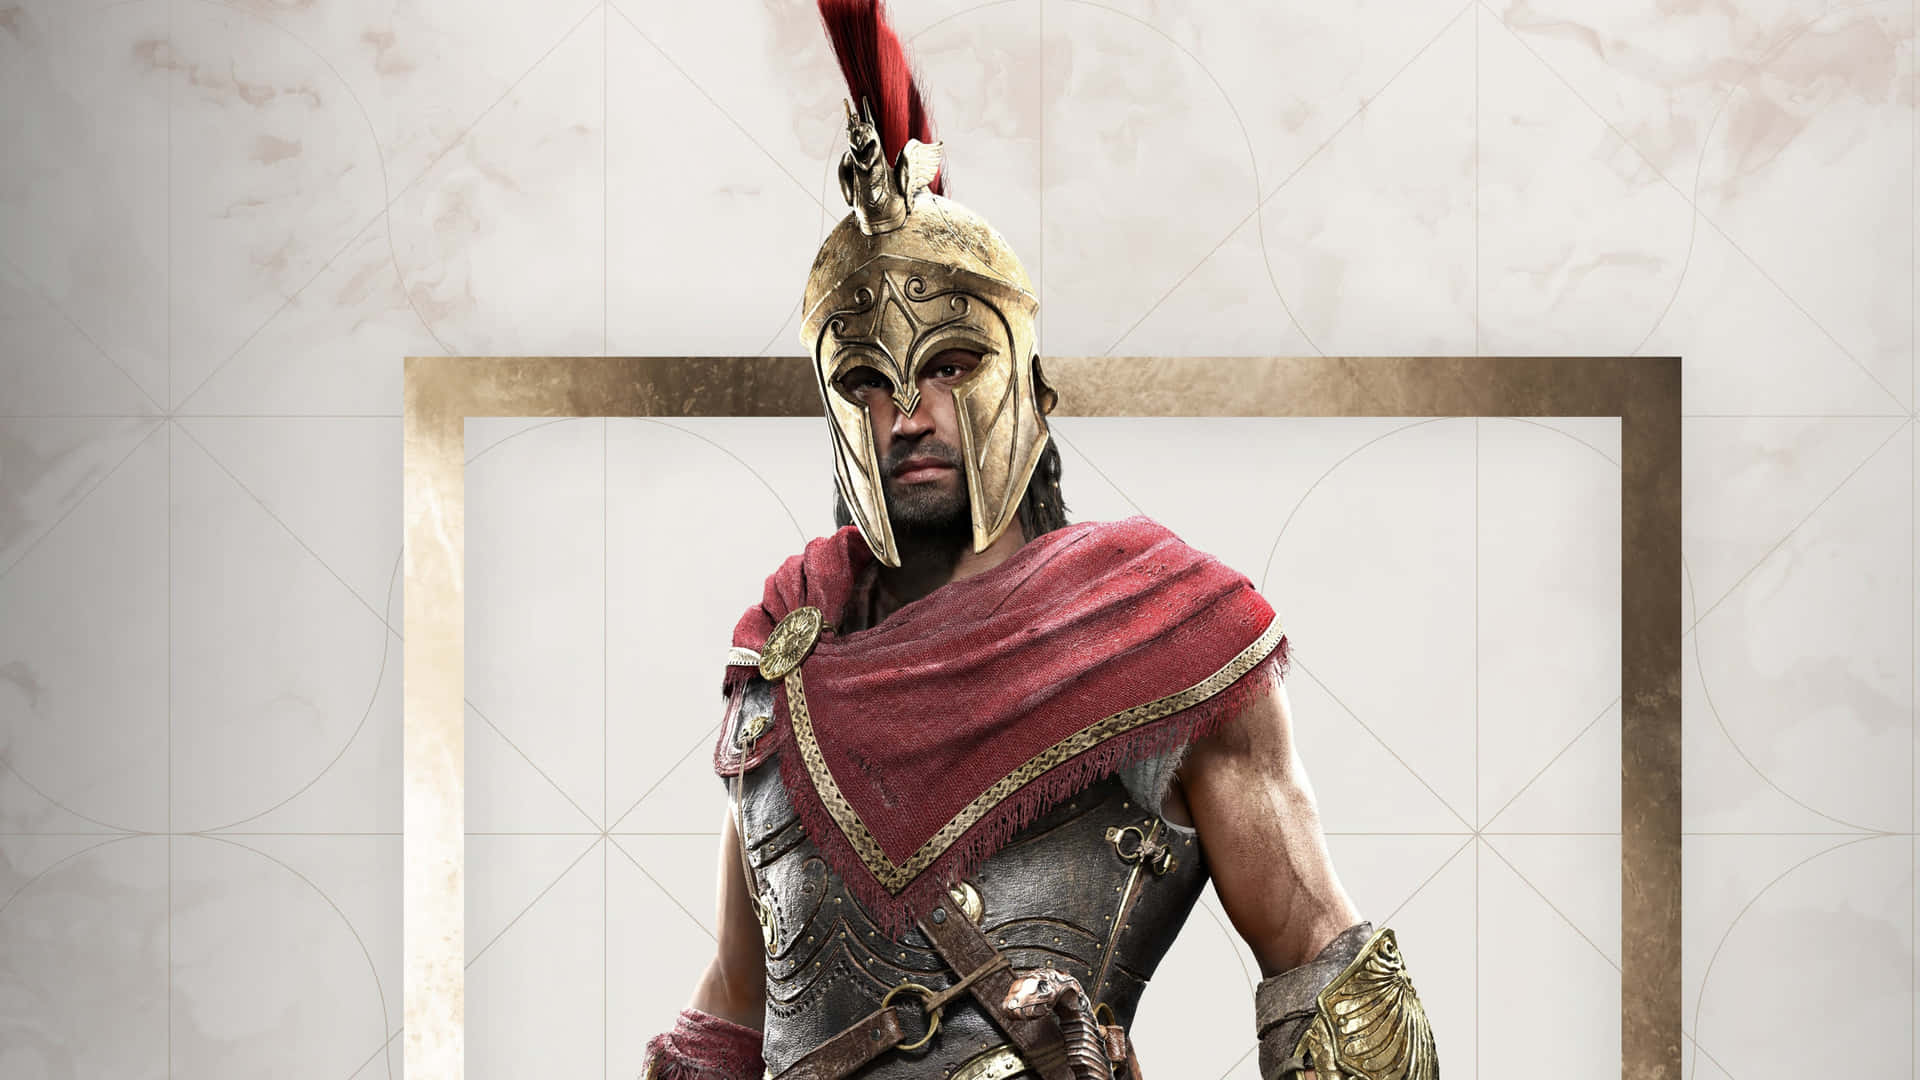 1440p Assassin 's Creed Odyssey Bakgrund